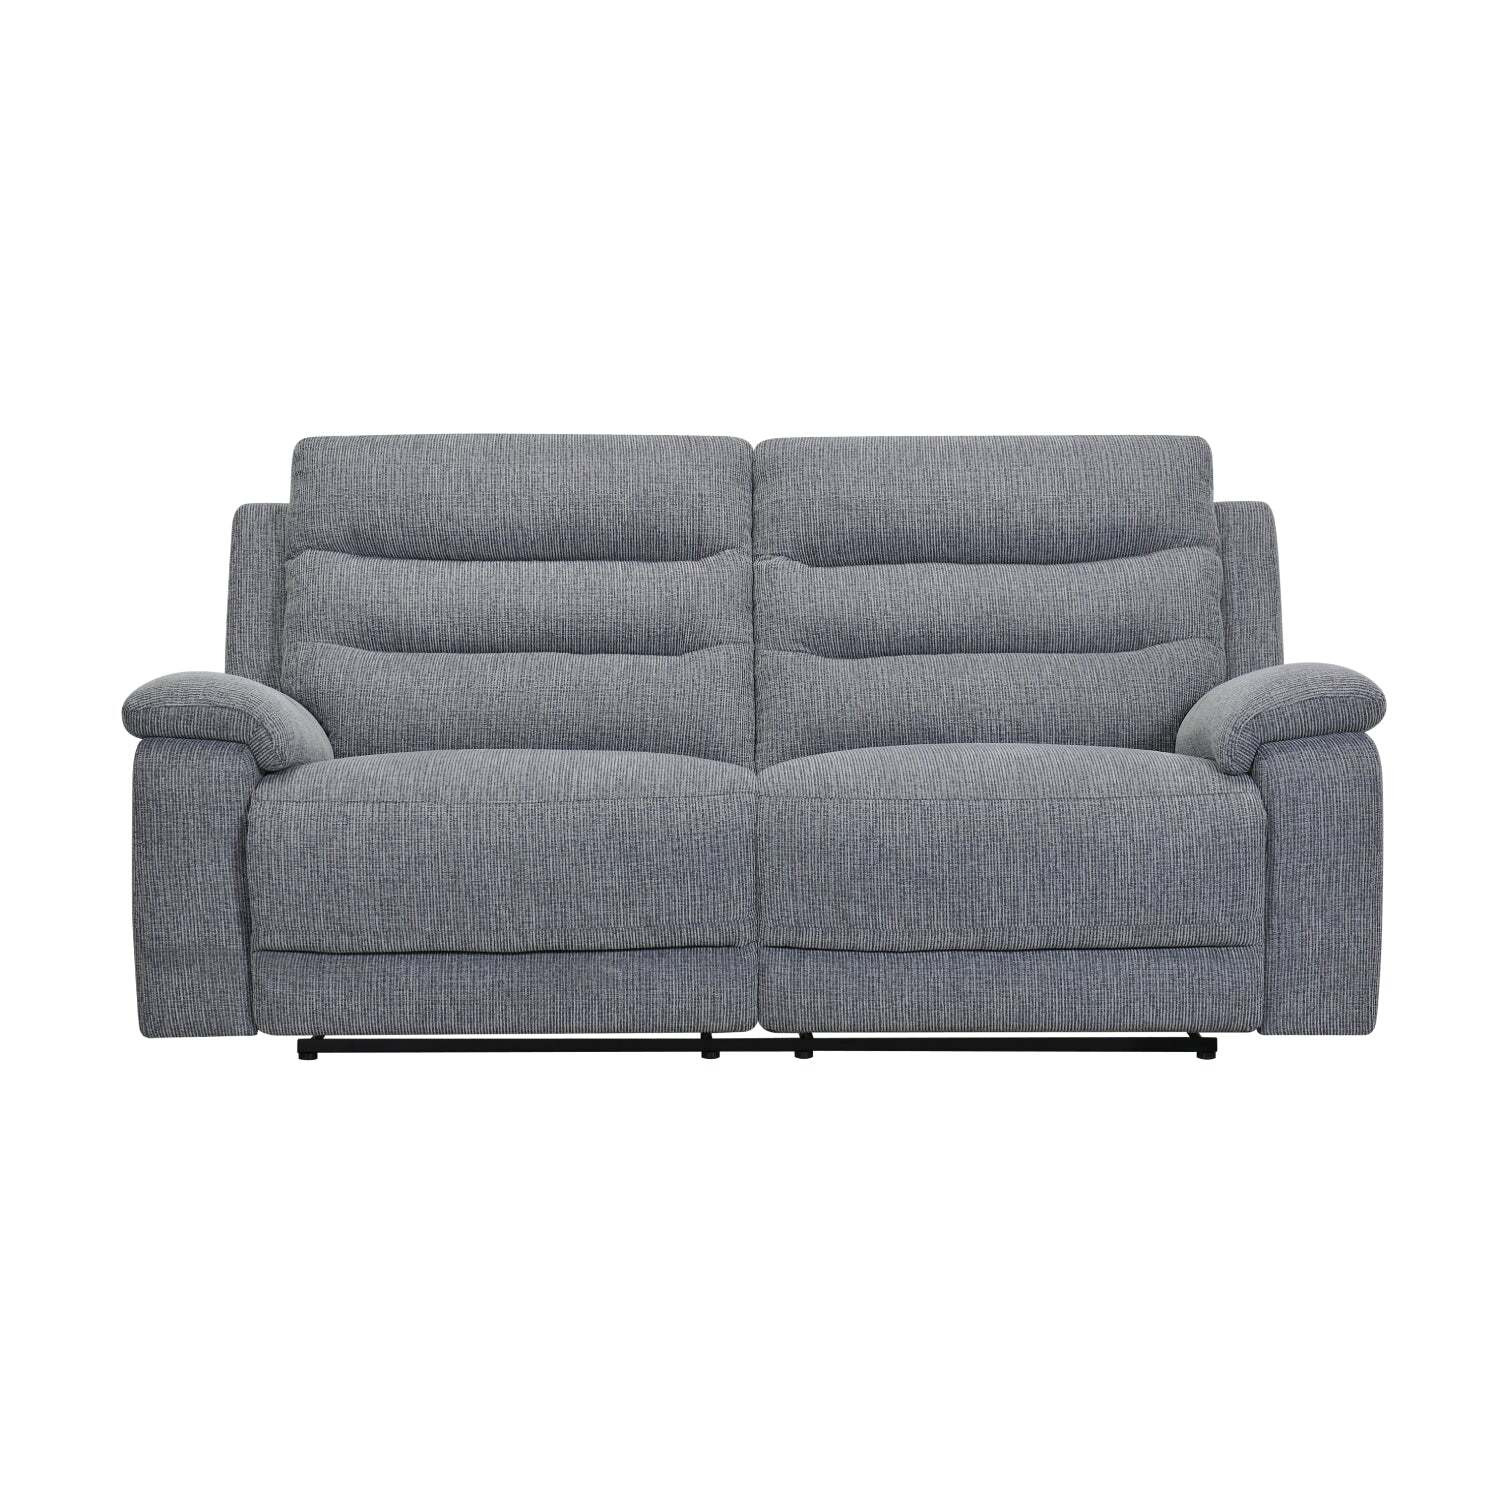 Ashby 3 Seater Fabric Reclining Sofa - Grey F20 TX2583 / Electric Reclining